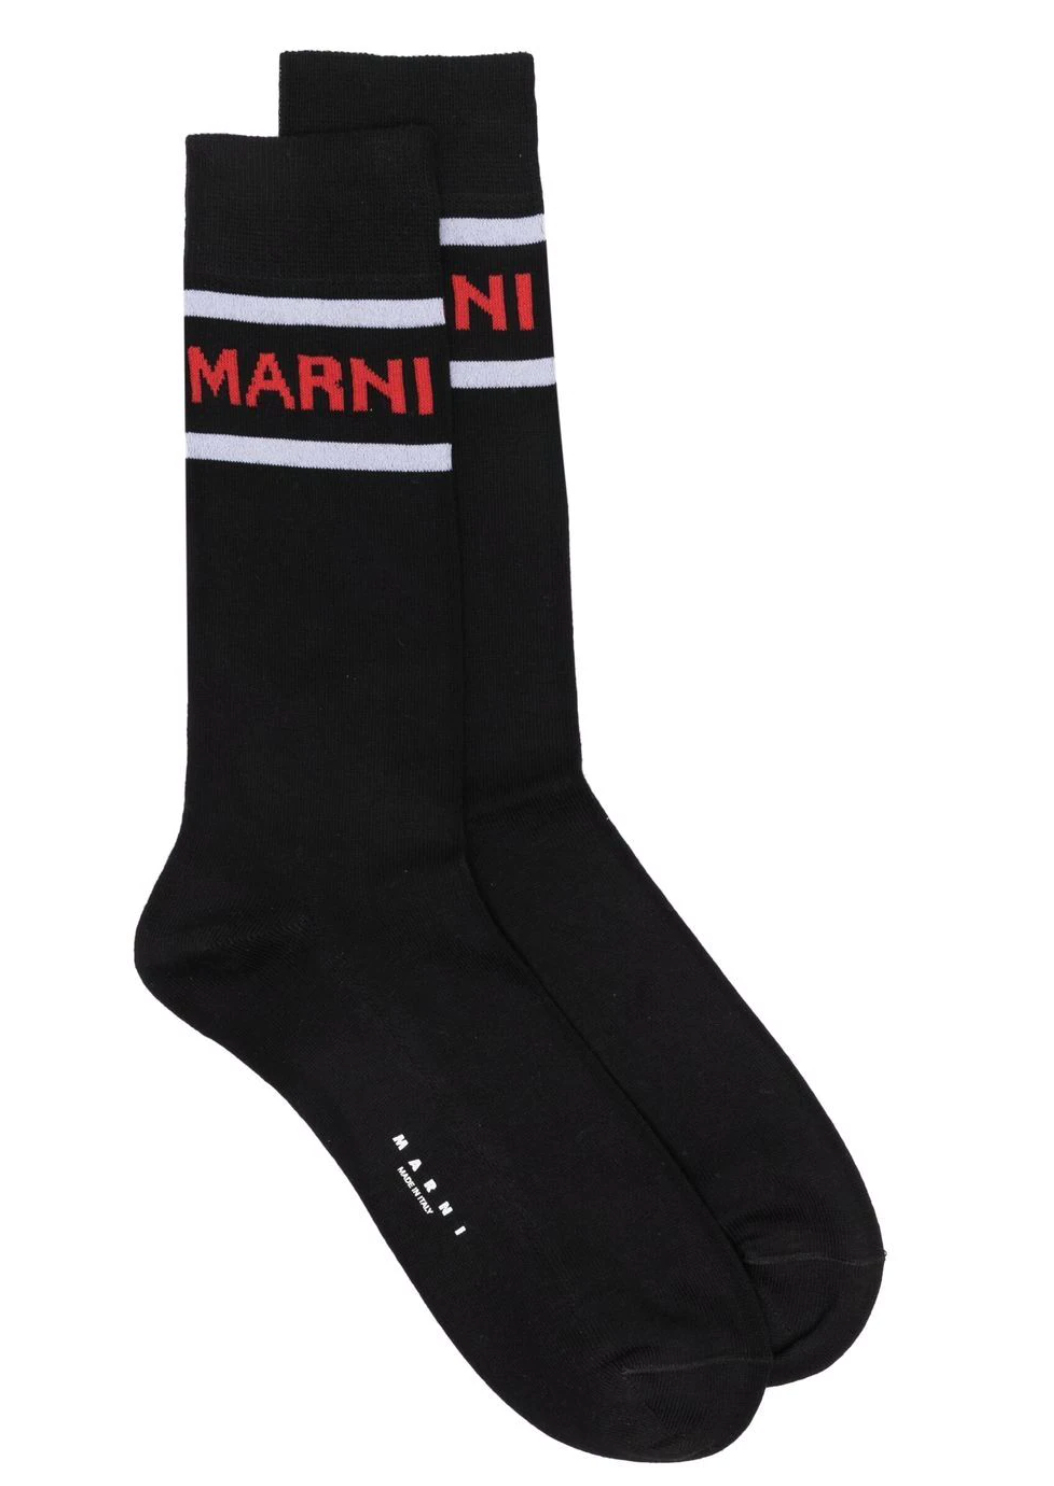 Marni 'Red Logo' Black Socks